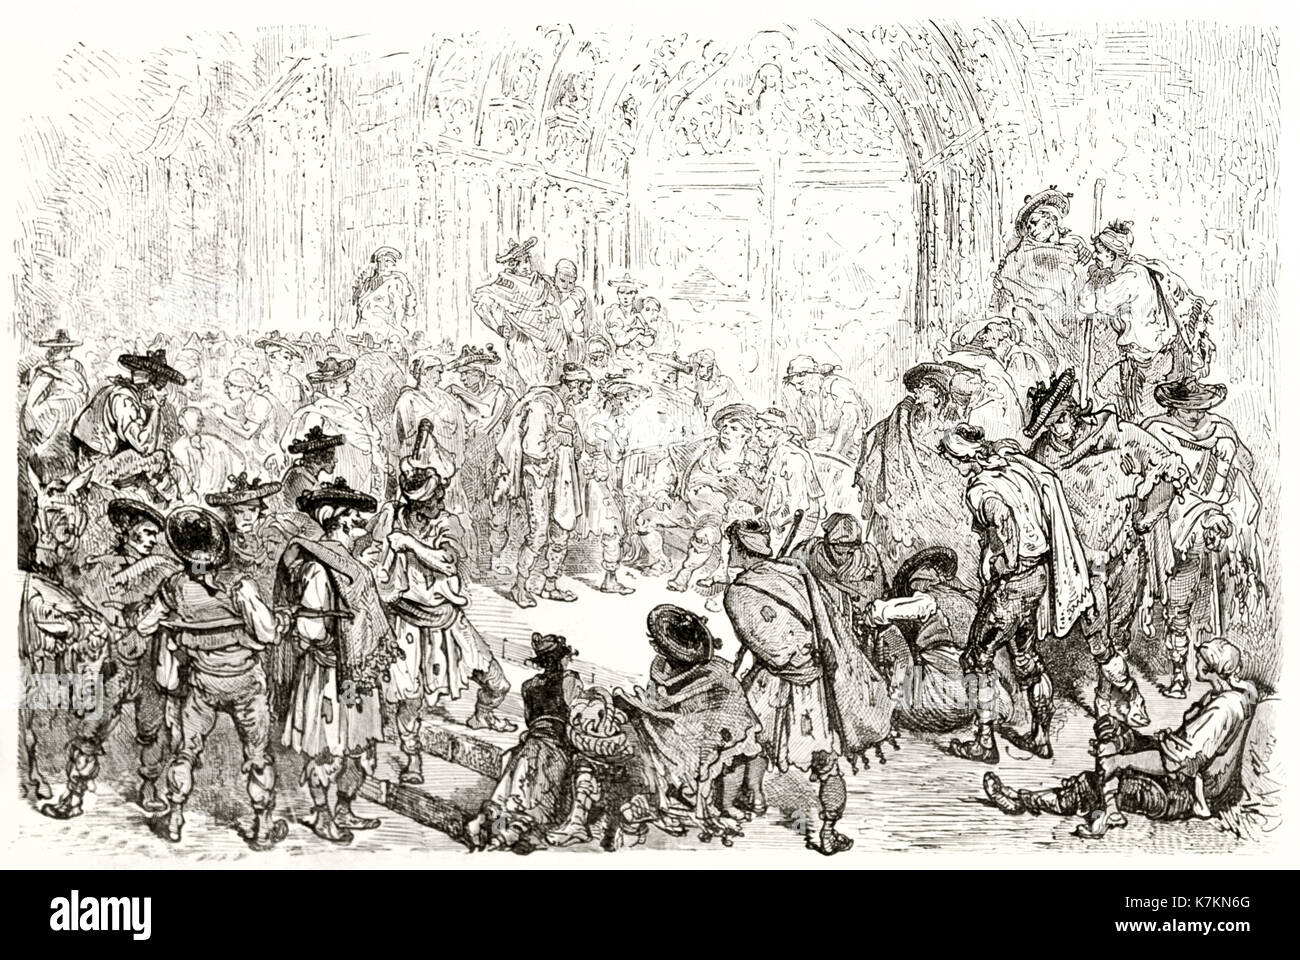 Old illustration depicting the Water Tribunal of the plain of Valencia, Spain. By Dore, publ. on Le Tour du Monde, Paris, 1862 Stock Photo